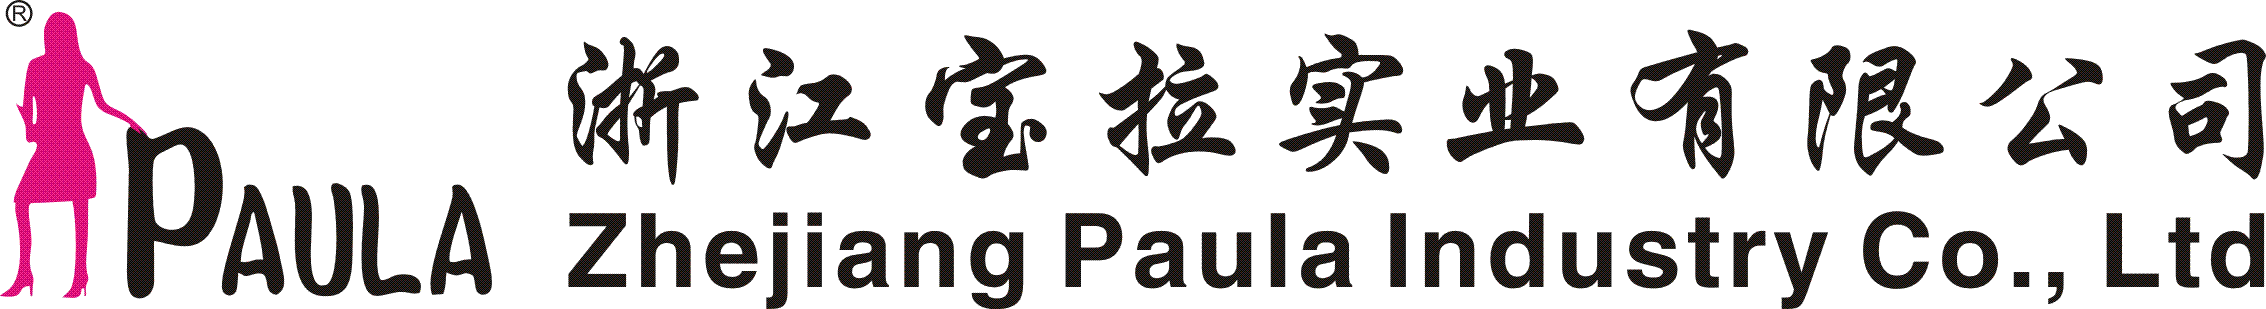 Zhejiang Paula Industry Co.,Ltd